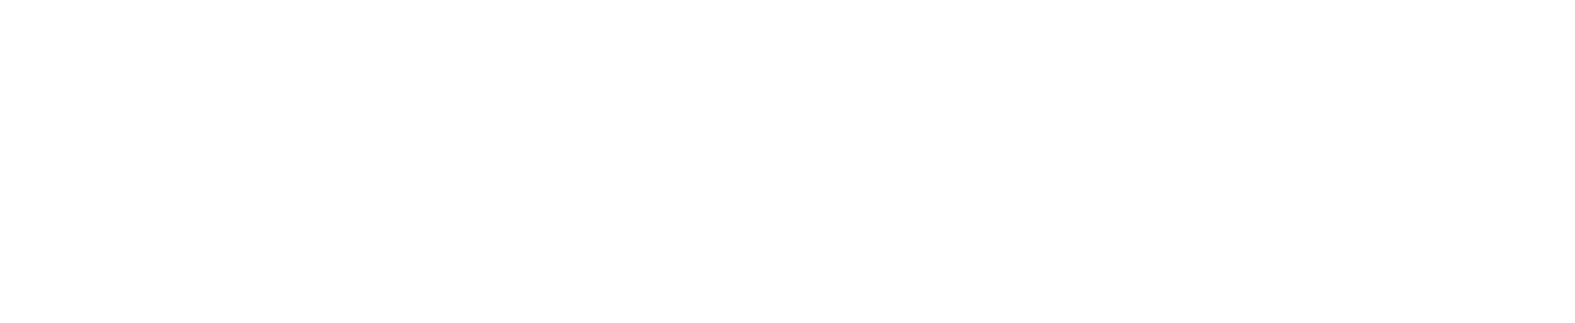 PagerDuty Logo groß für dunkle Hintergründe (transparentes PNG)